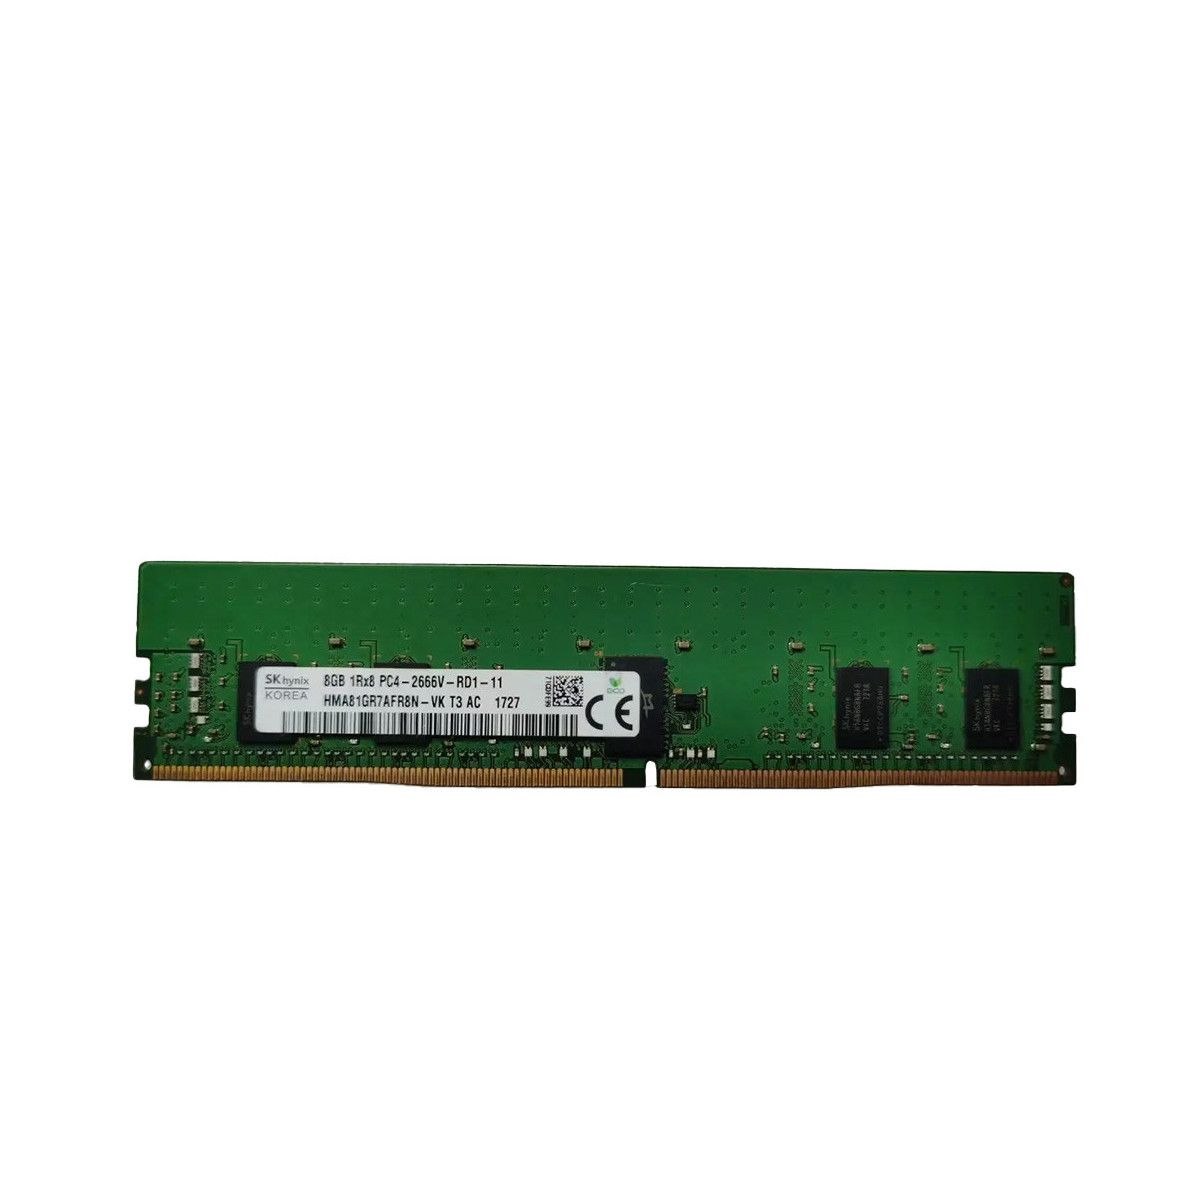 850879-001-MS - Memstar 1x 8GB DDR4-2666 RDIMM PC4-21300V-R - Mem-Star OEM compatibile Memoria 1 - Memstar 